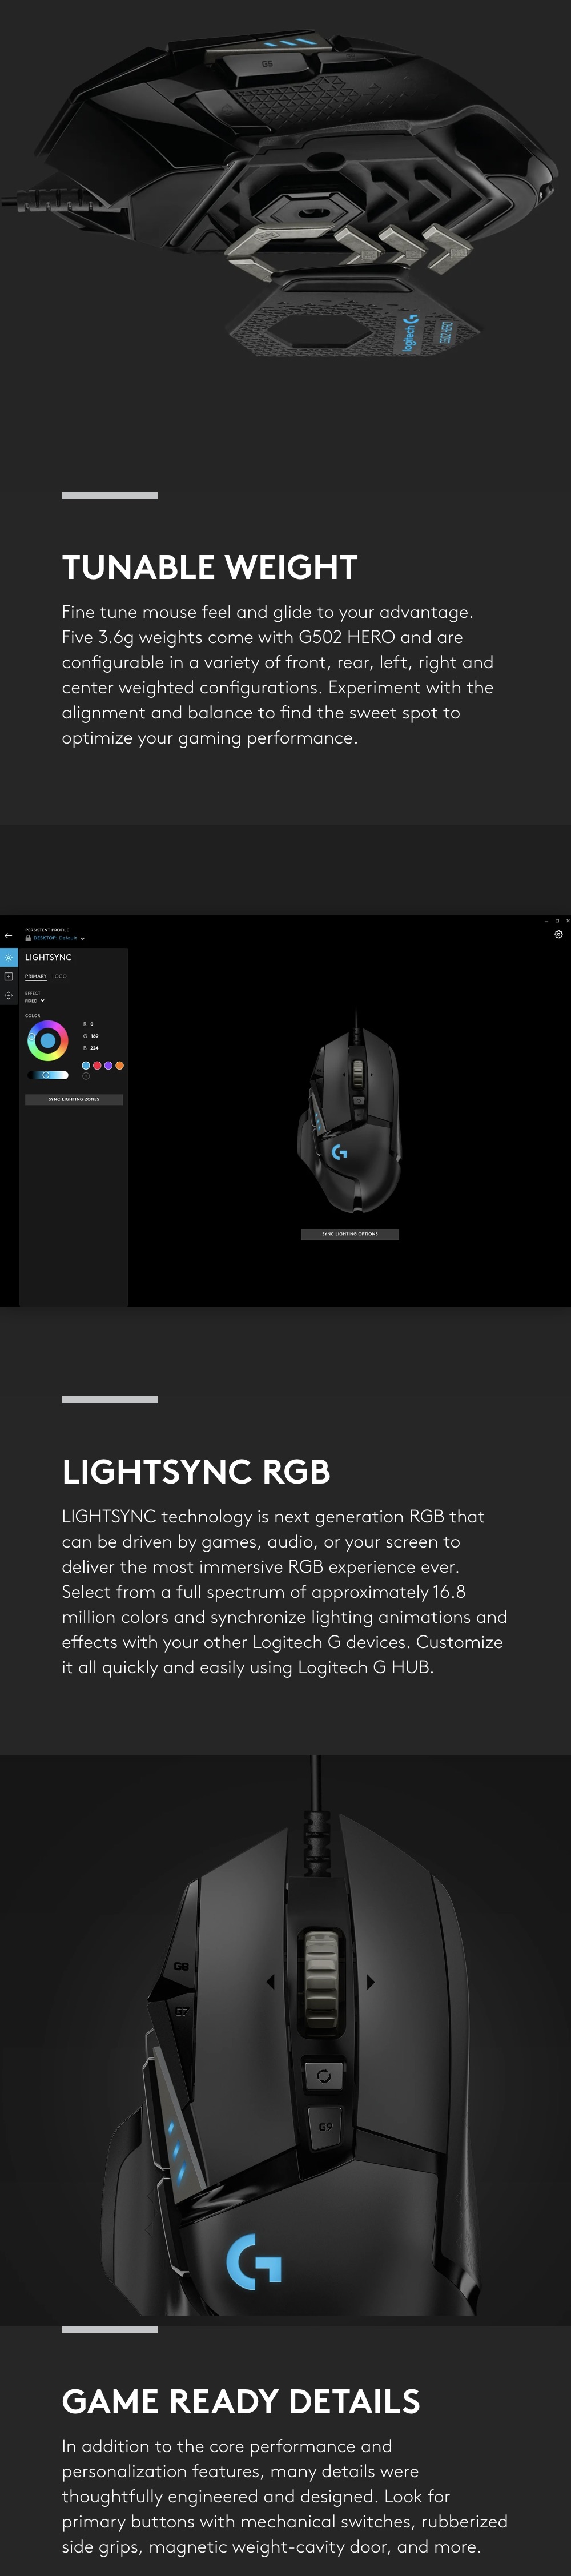 Logitech-G502-Hero-High-Performance-Gaming-Mouse-Description-2